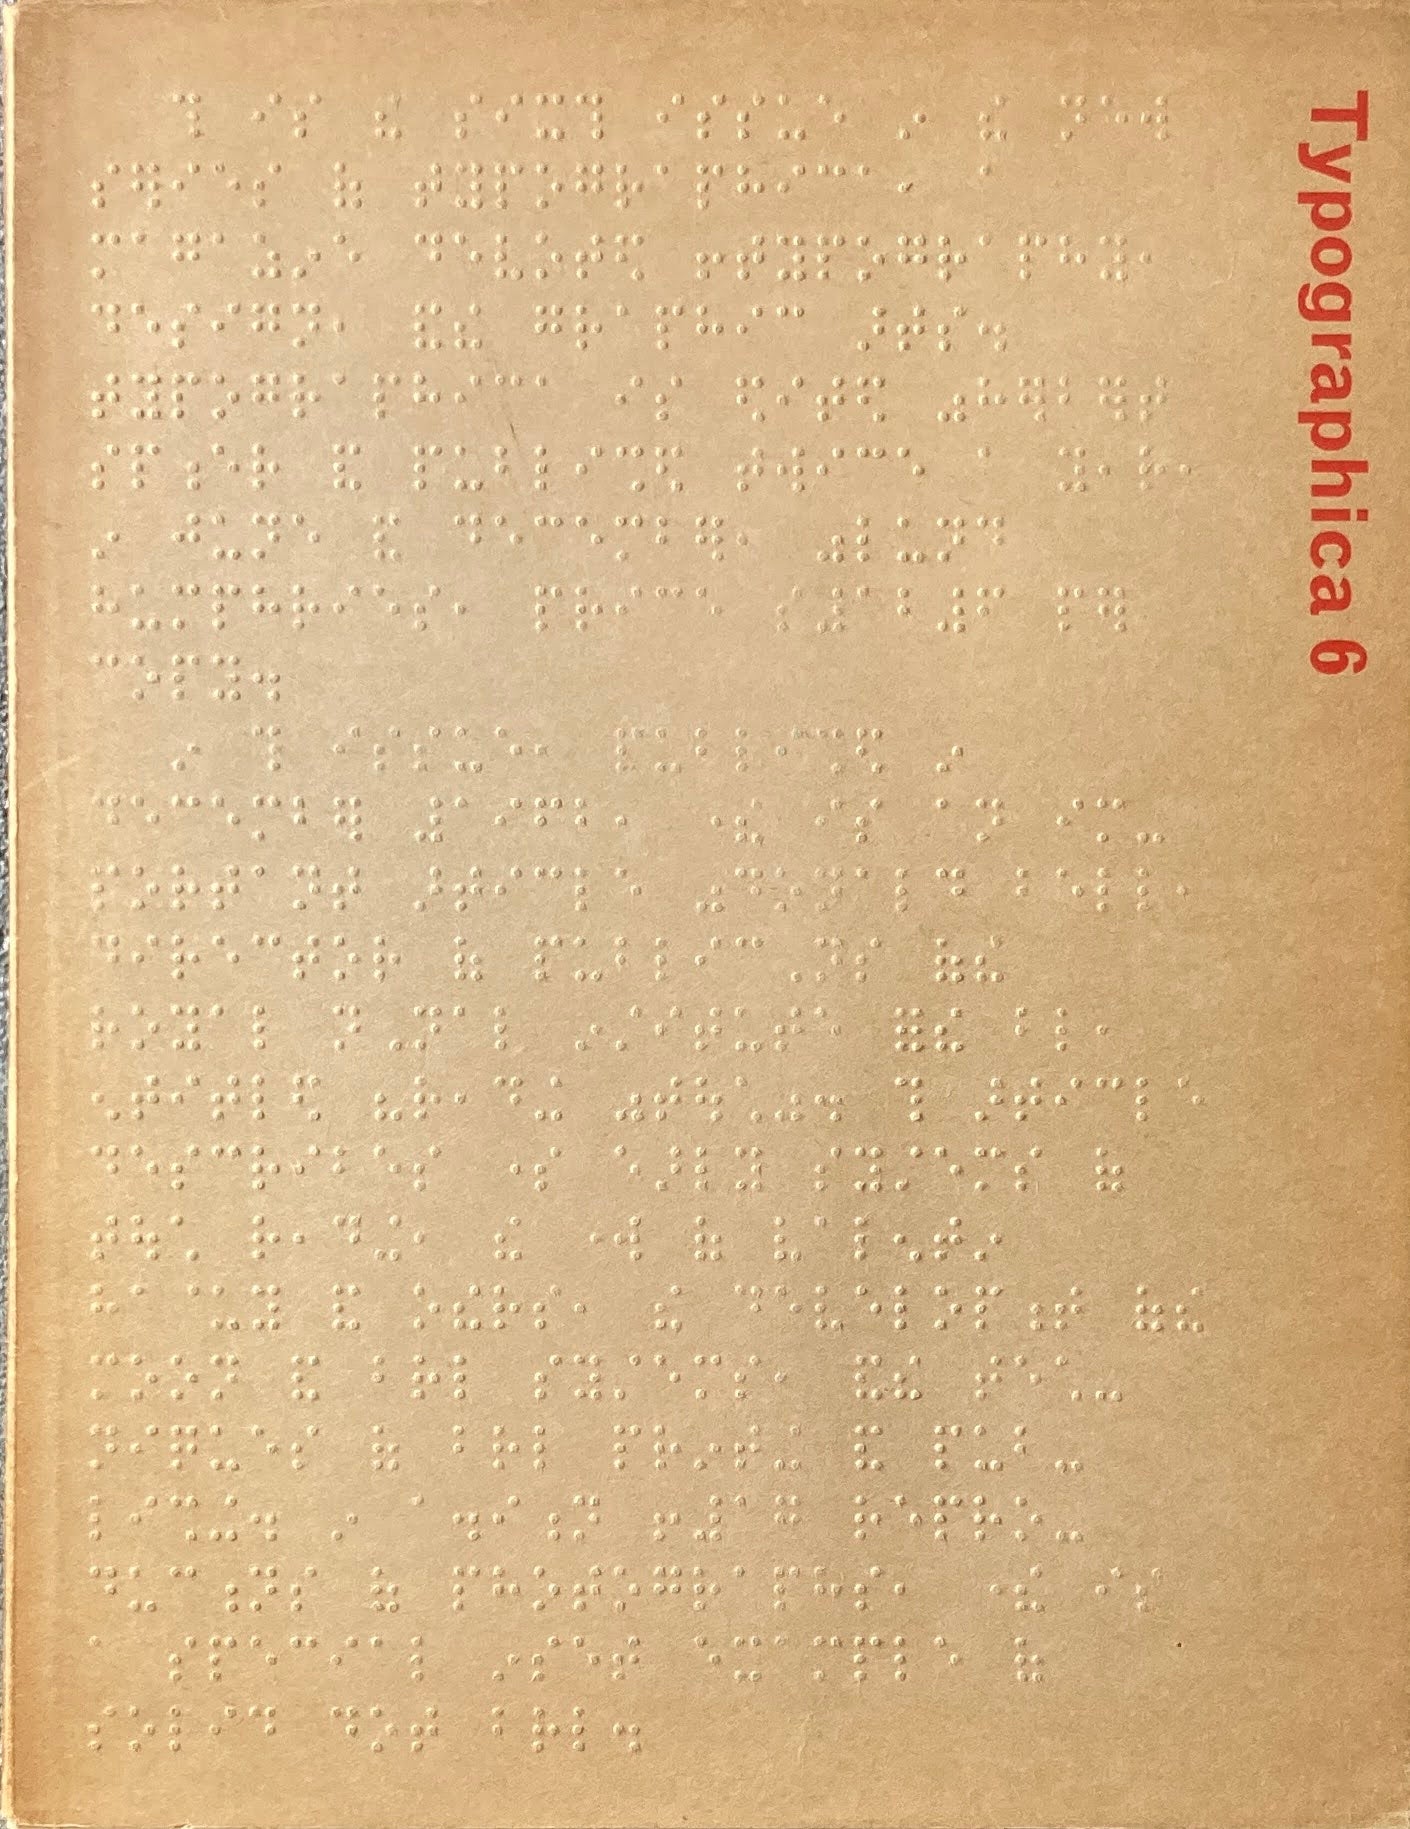 Typographica 6  December 1962　edited by Herbert Spencer